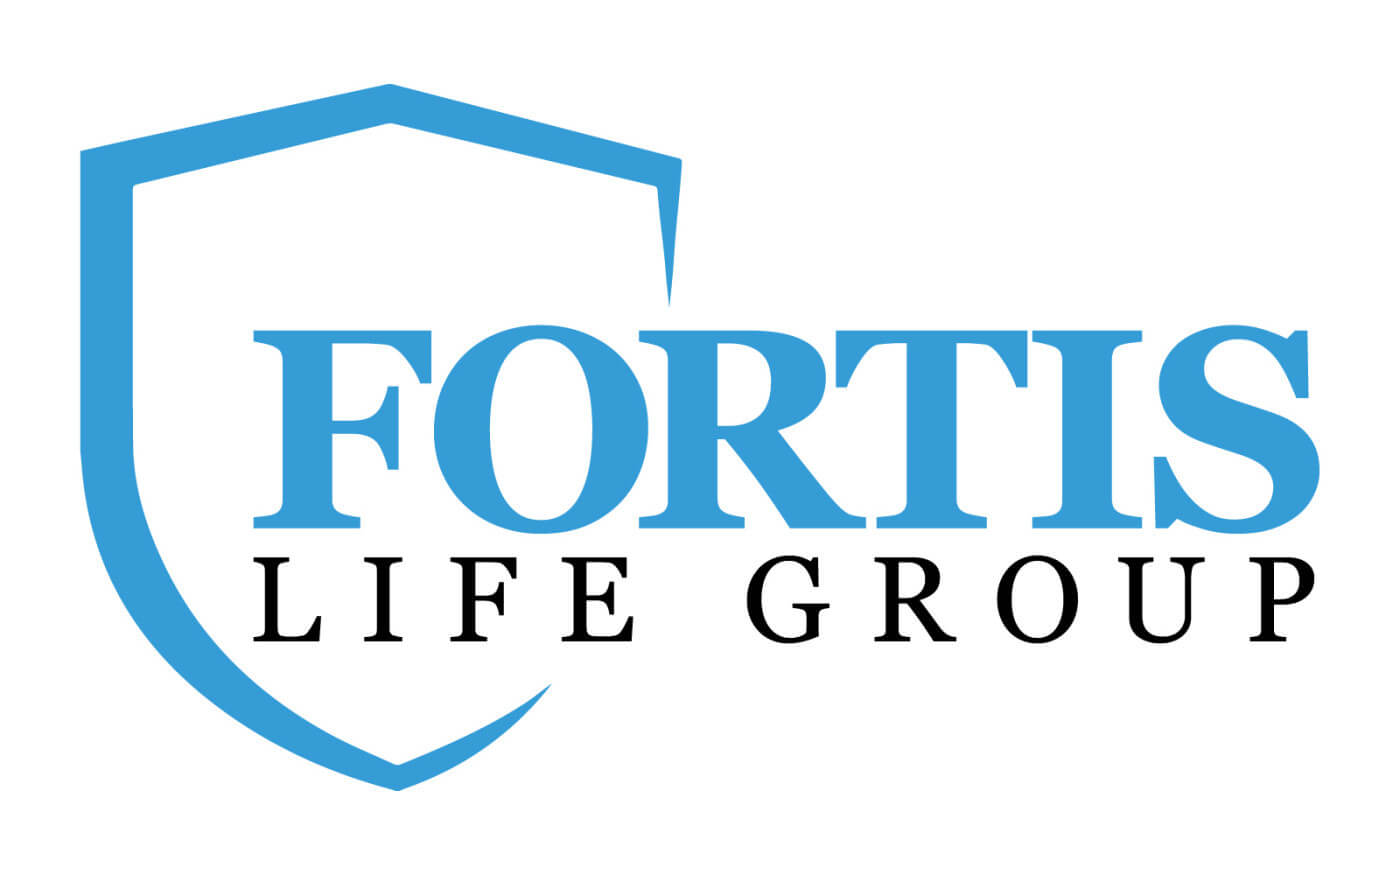 Fortis Life Group